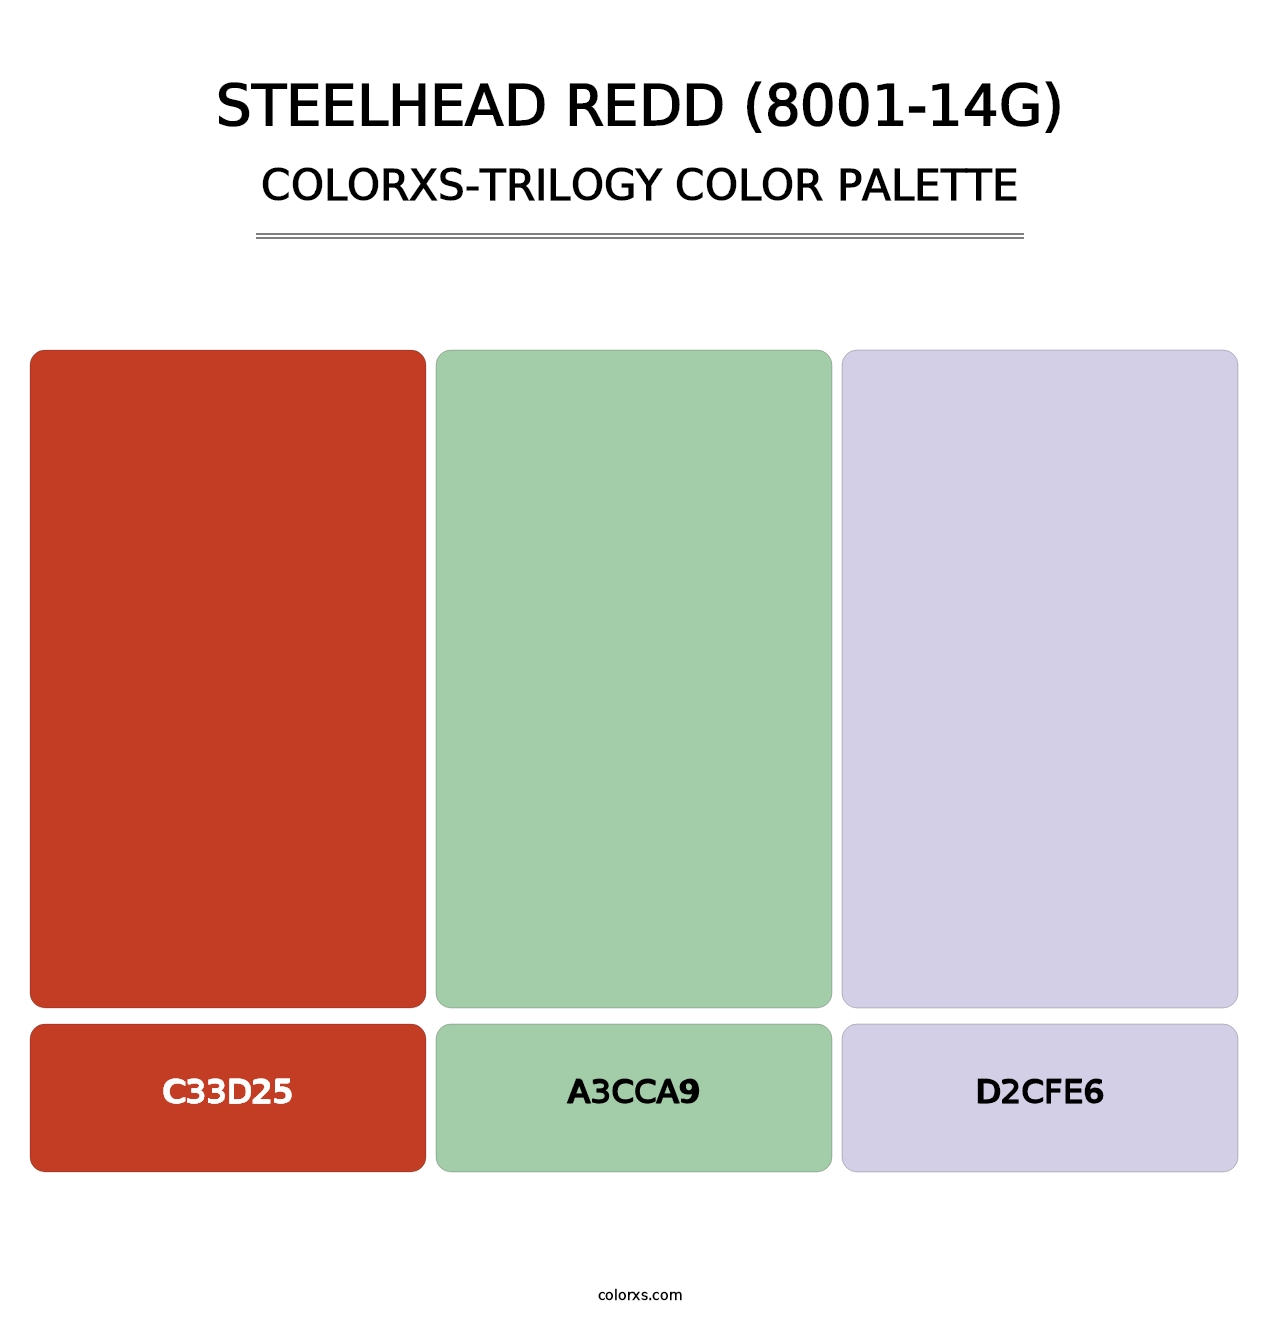 Steelhead Redd (8001-14G) - Colorxs Trilogy Palette